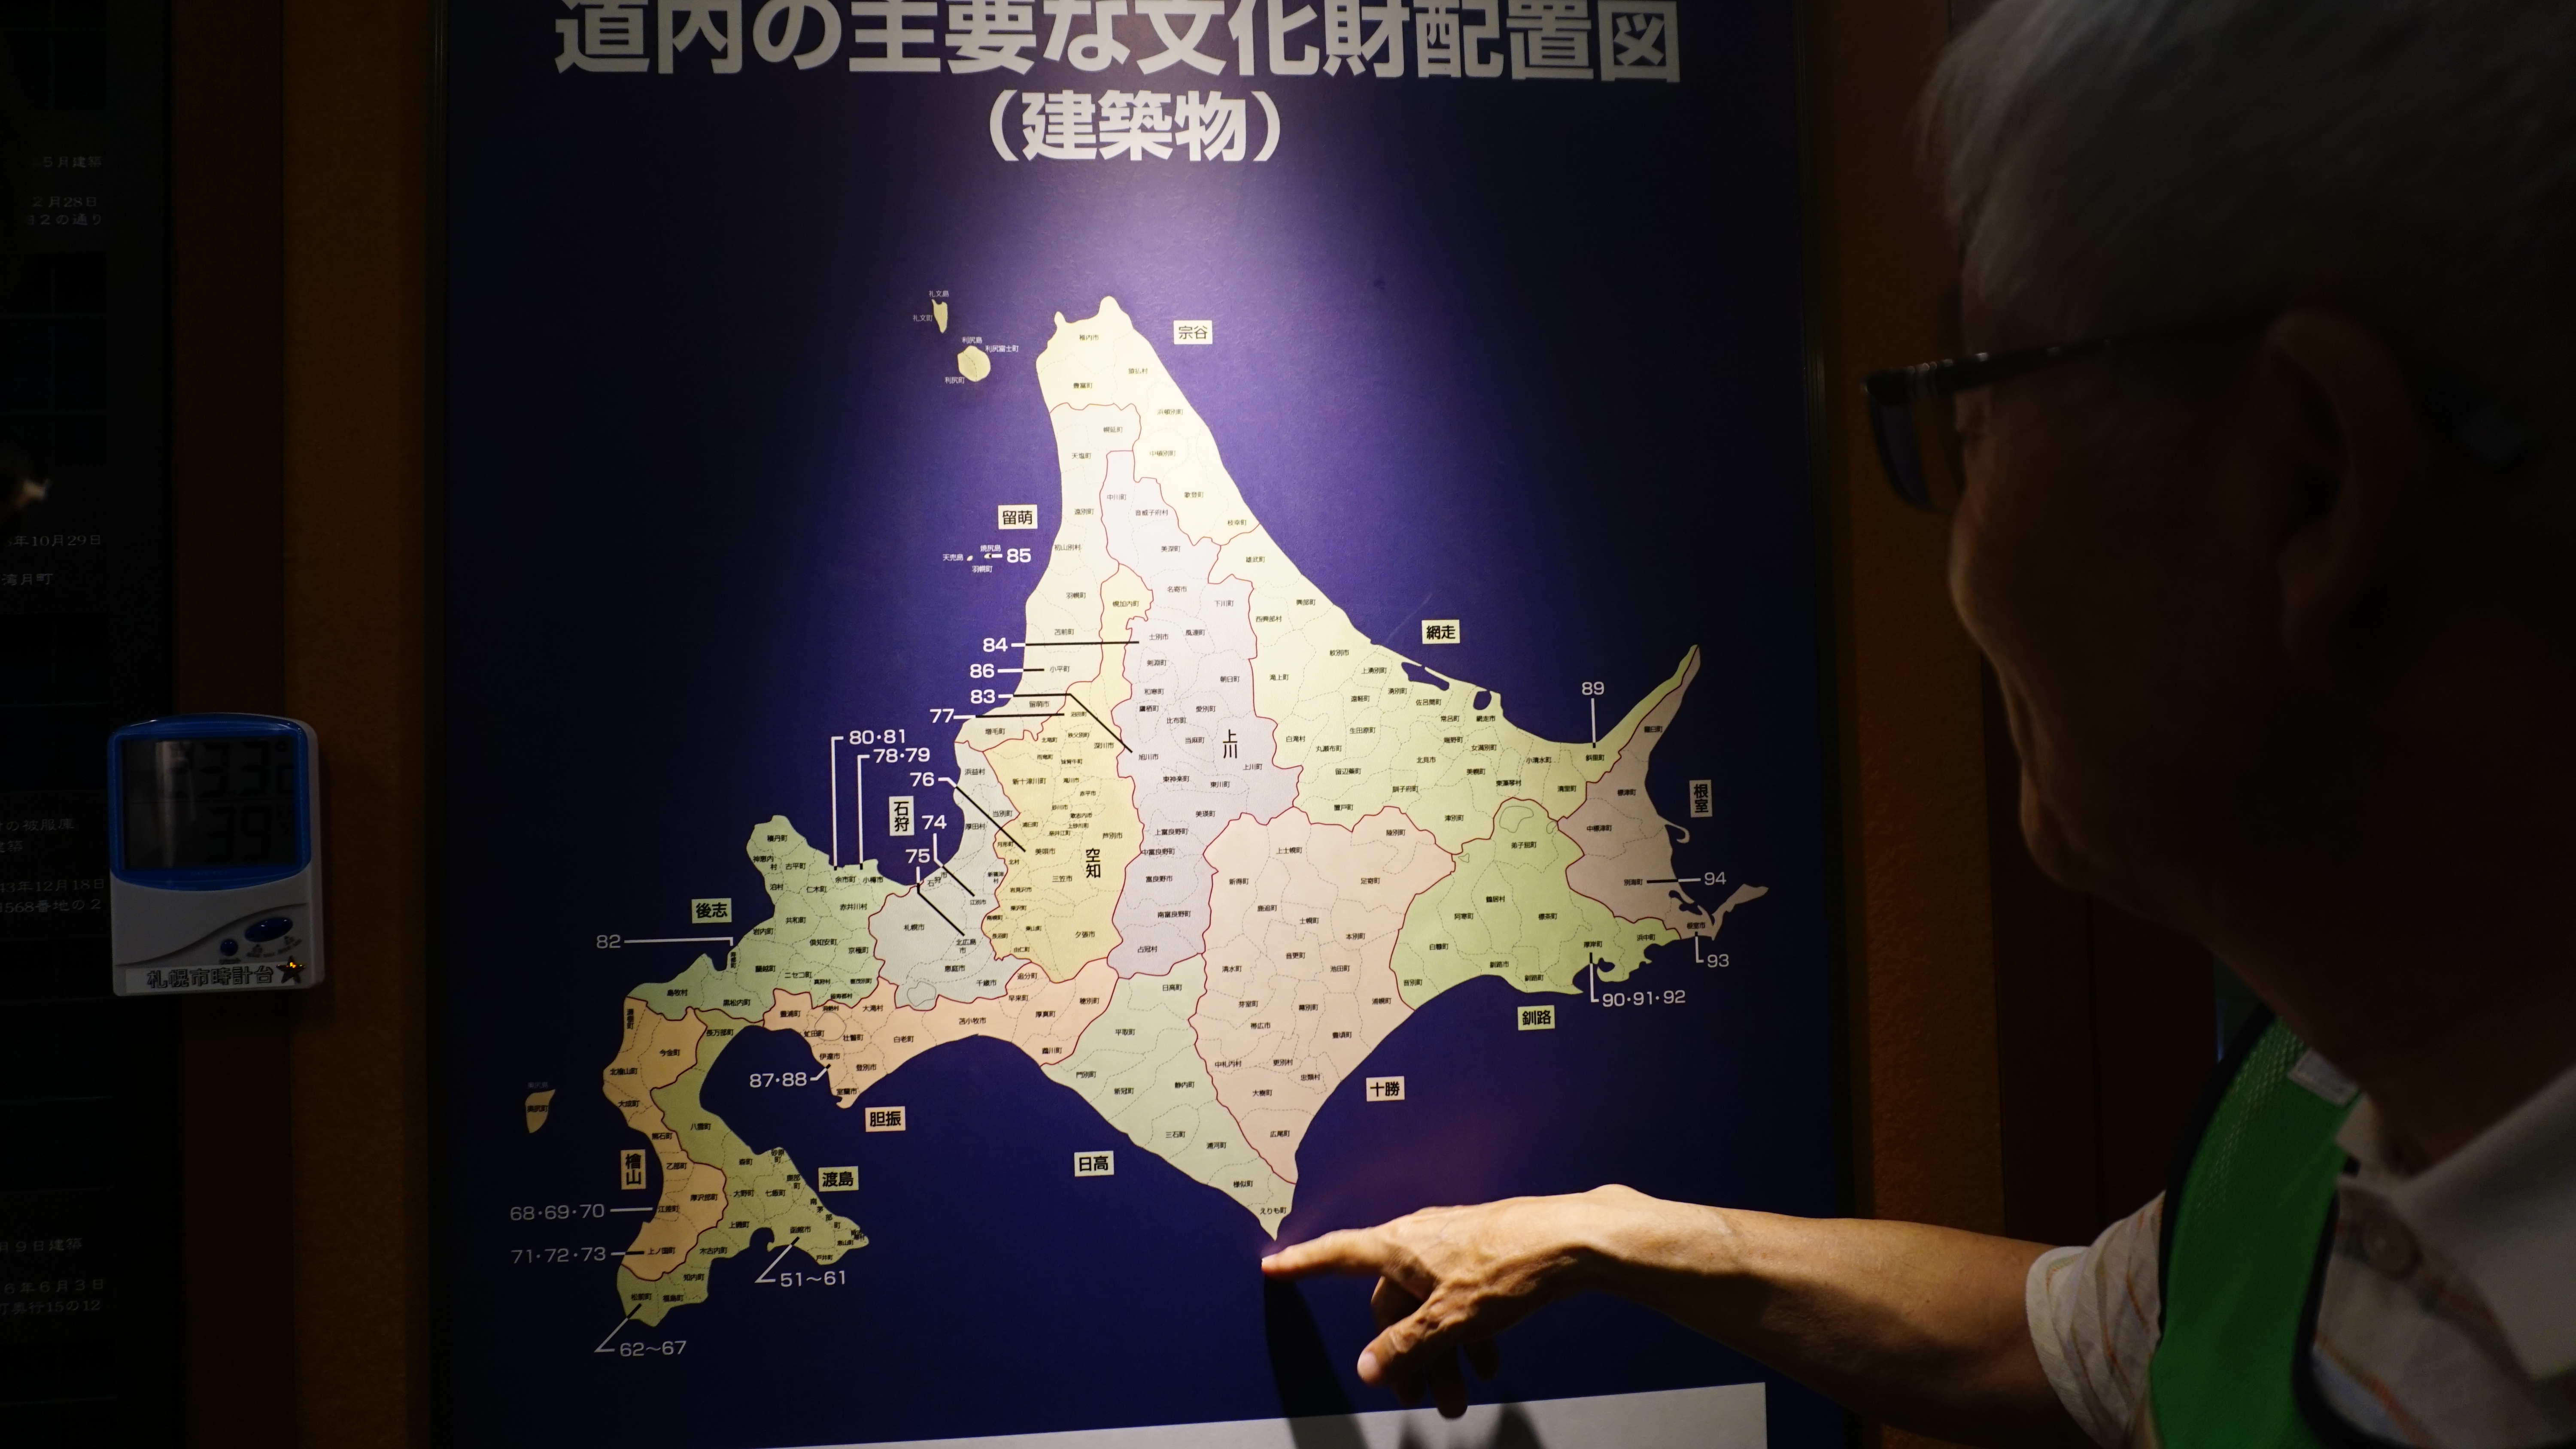 Hokkaido Map